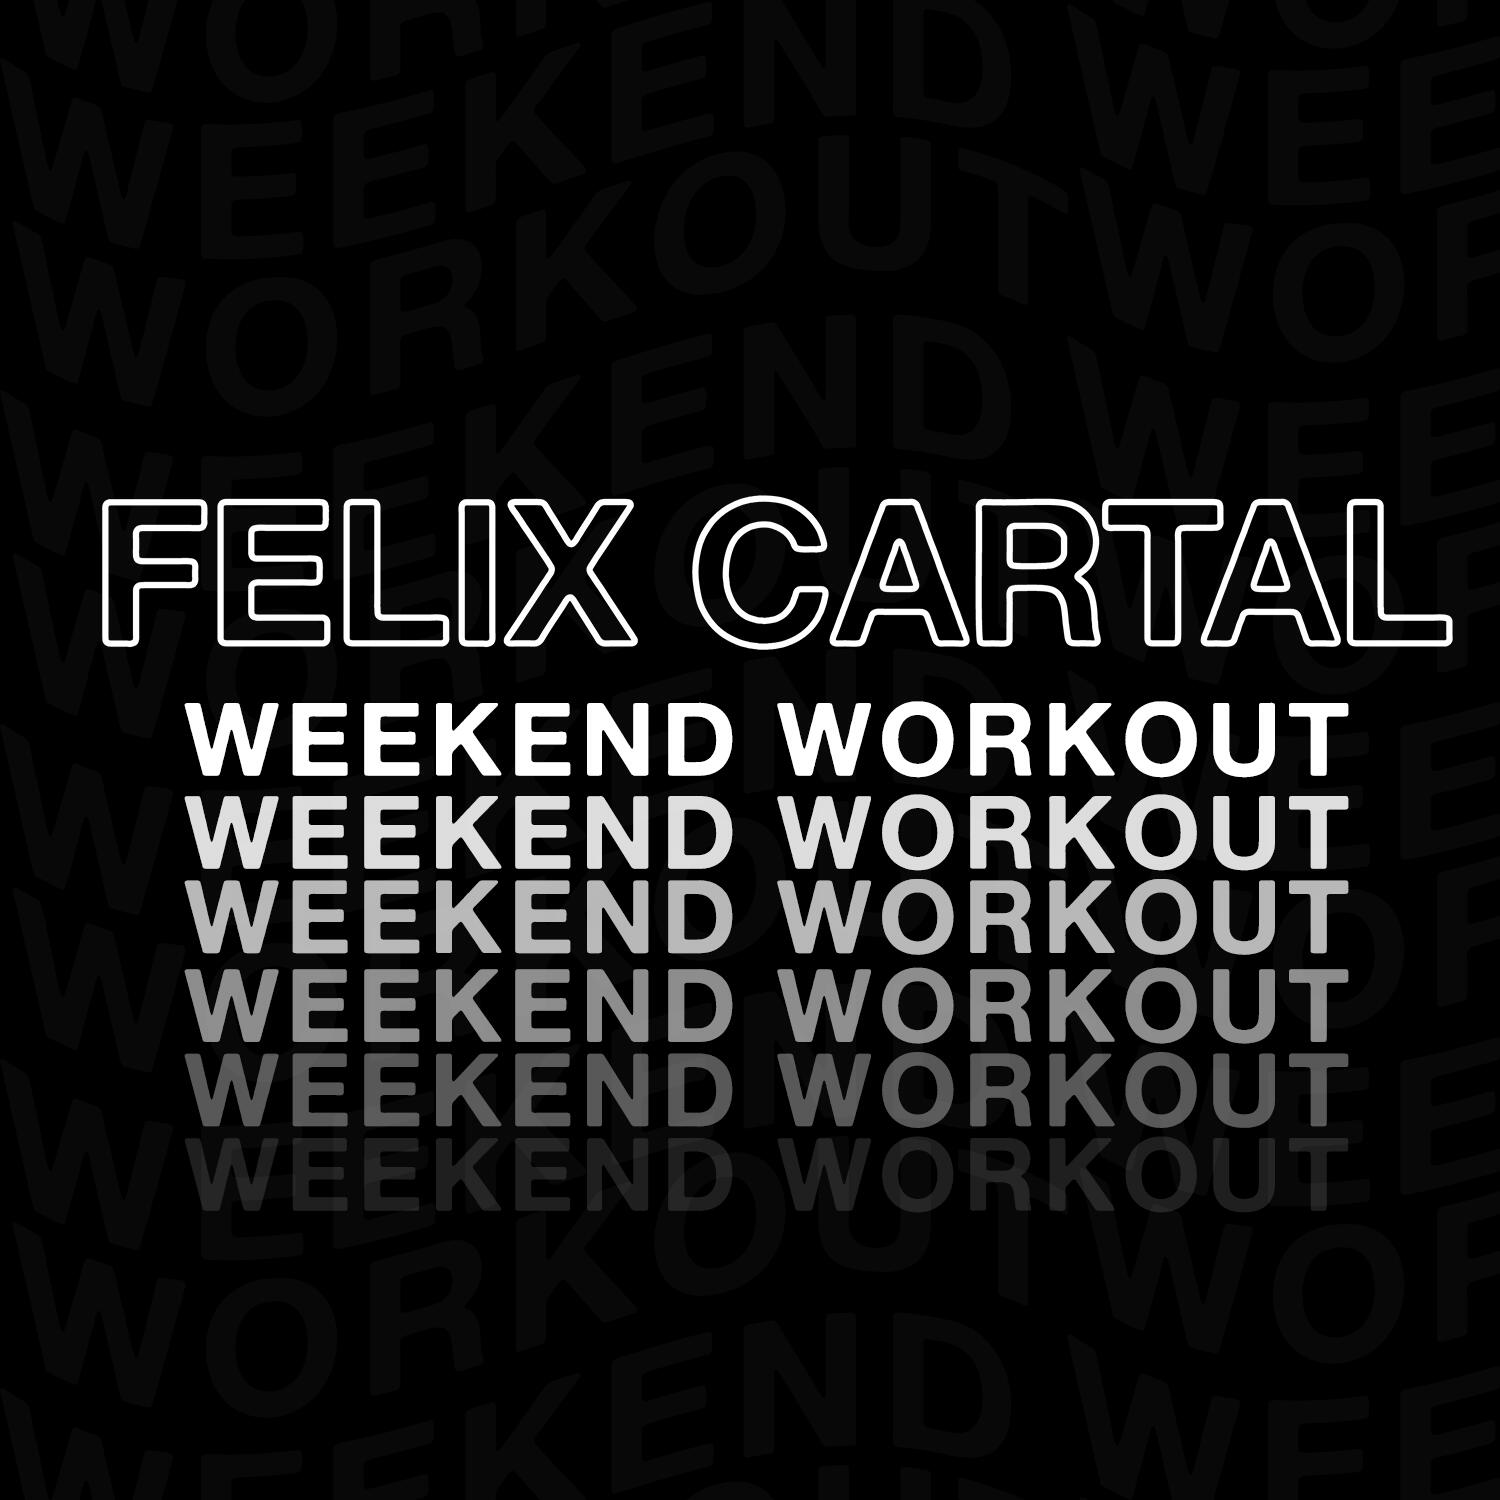 House every weekend Workout. Cartal. Weekend walker